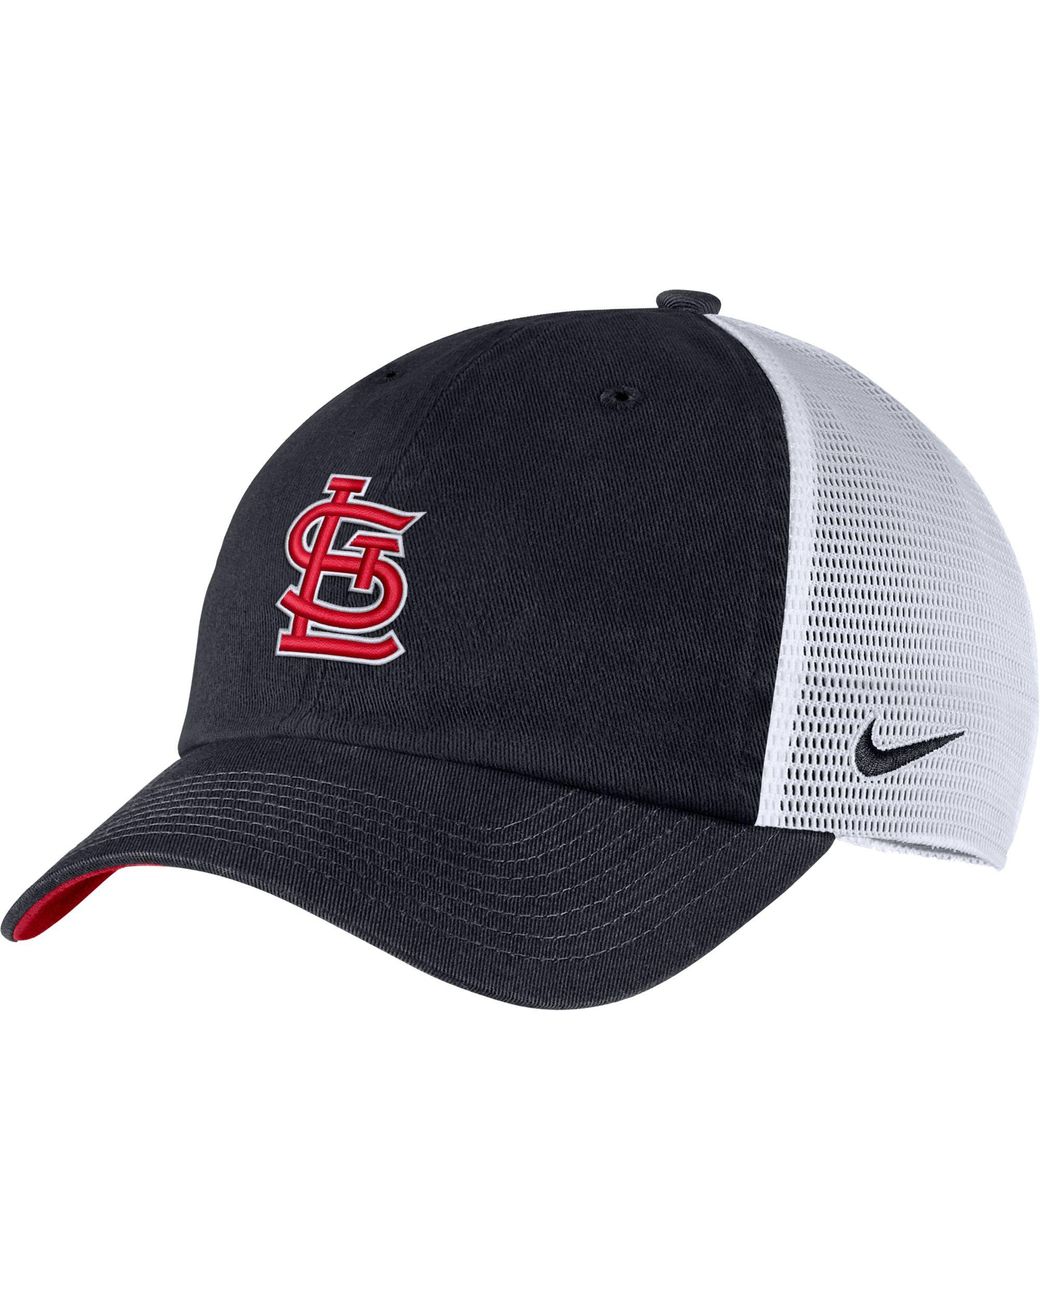 Nike St. Louis Cardinals H86 Trucker Adjustable Hat in Blue for Men - Lyst